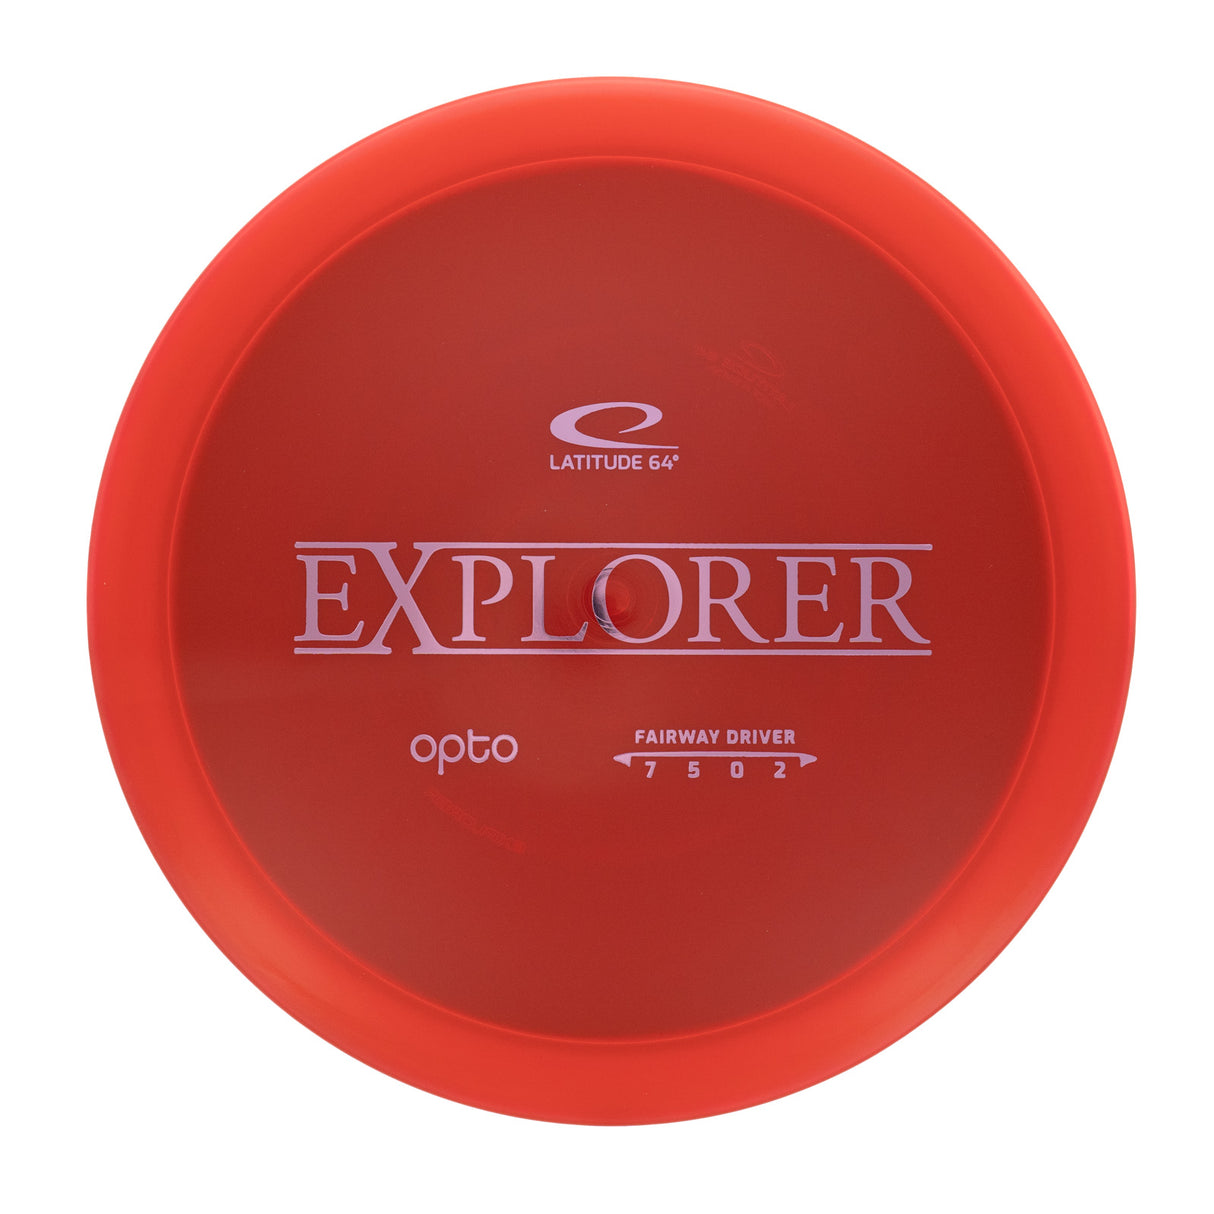 Latitude 64 Explorer - Opto 173g | Style 0001